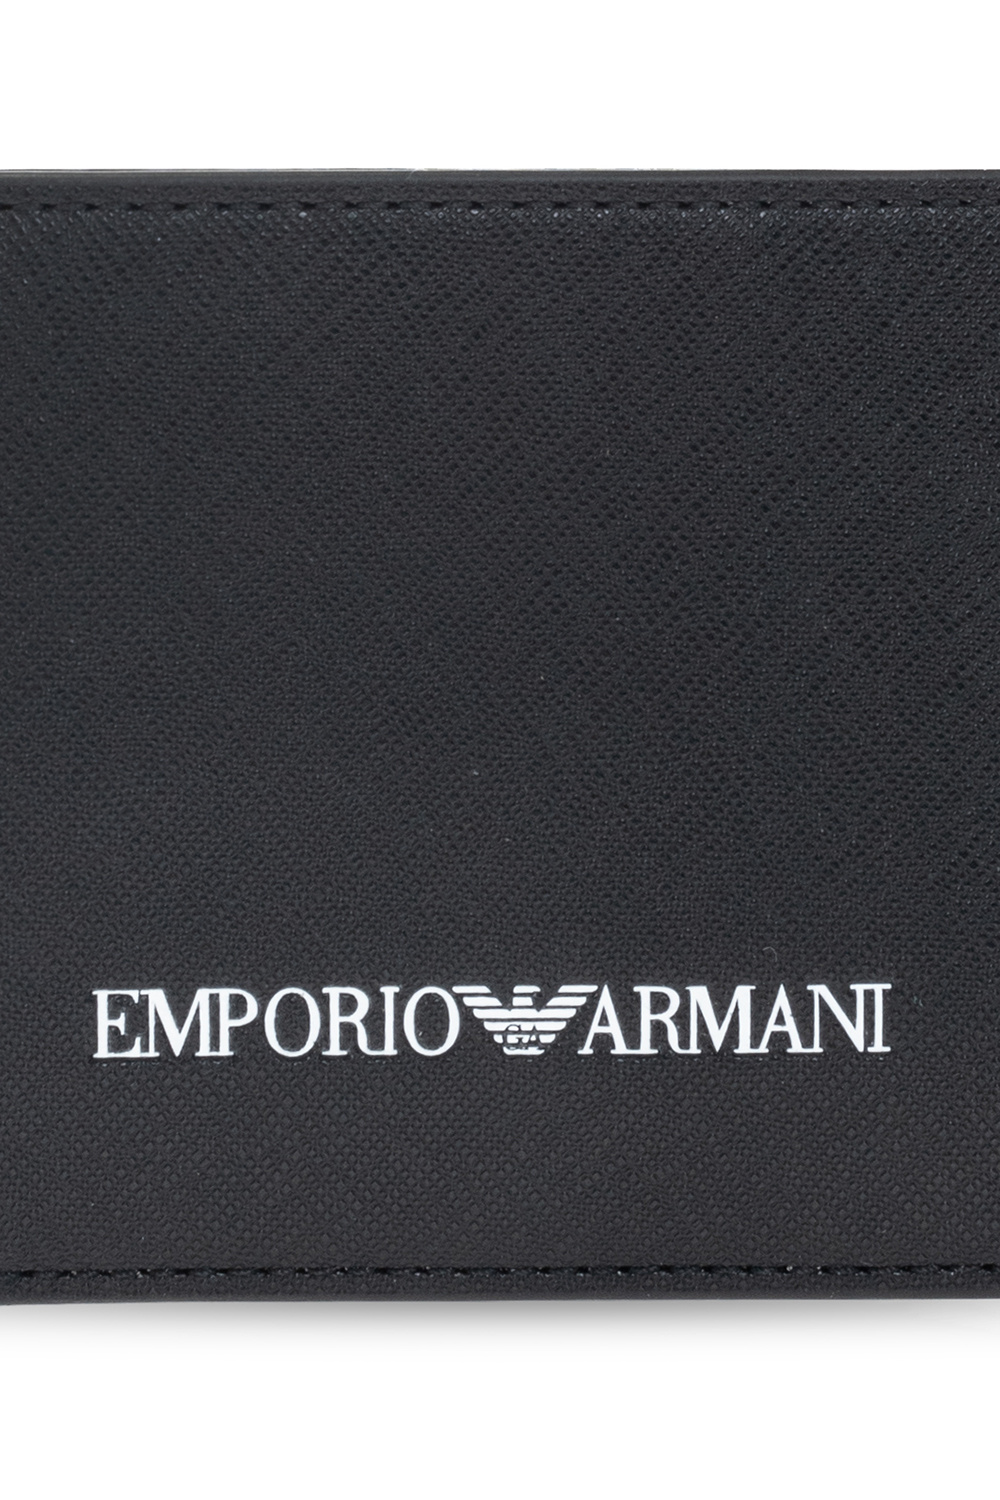 Emporio Armani Bifold wallet with logo